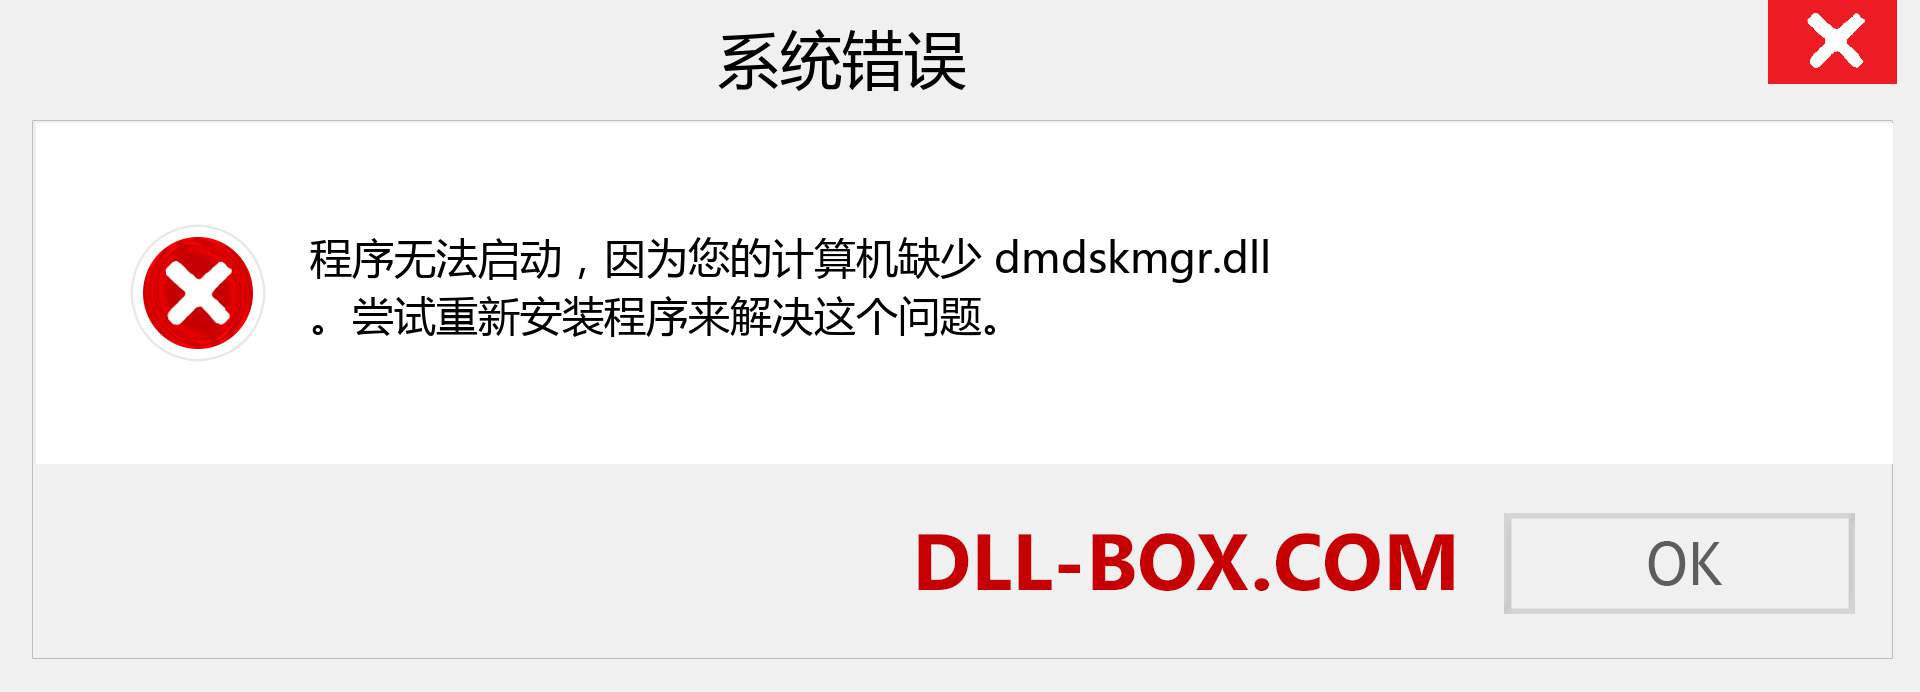 dmdskmgr.dll 文件丢失？。 适用于 Windows 7、8、10 的下载 - 修复 Windows、照片、图像上的 dmdskmgr dll 丢失错误